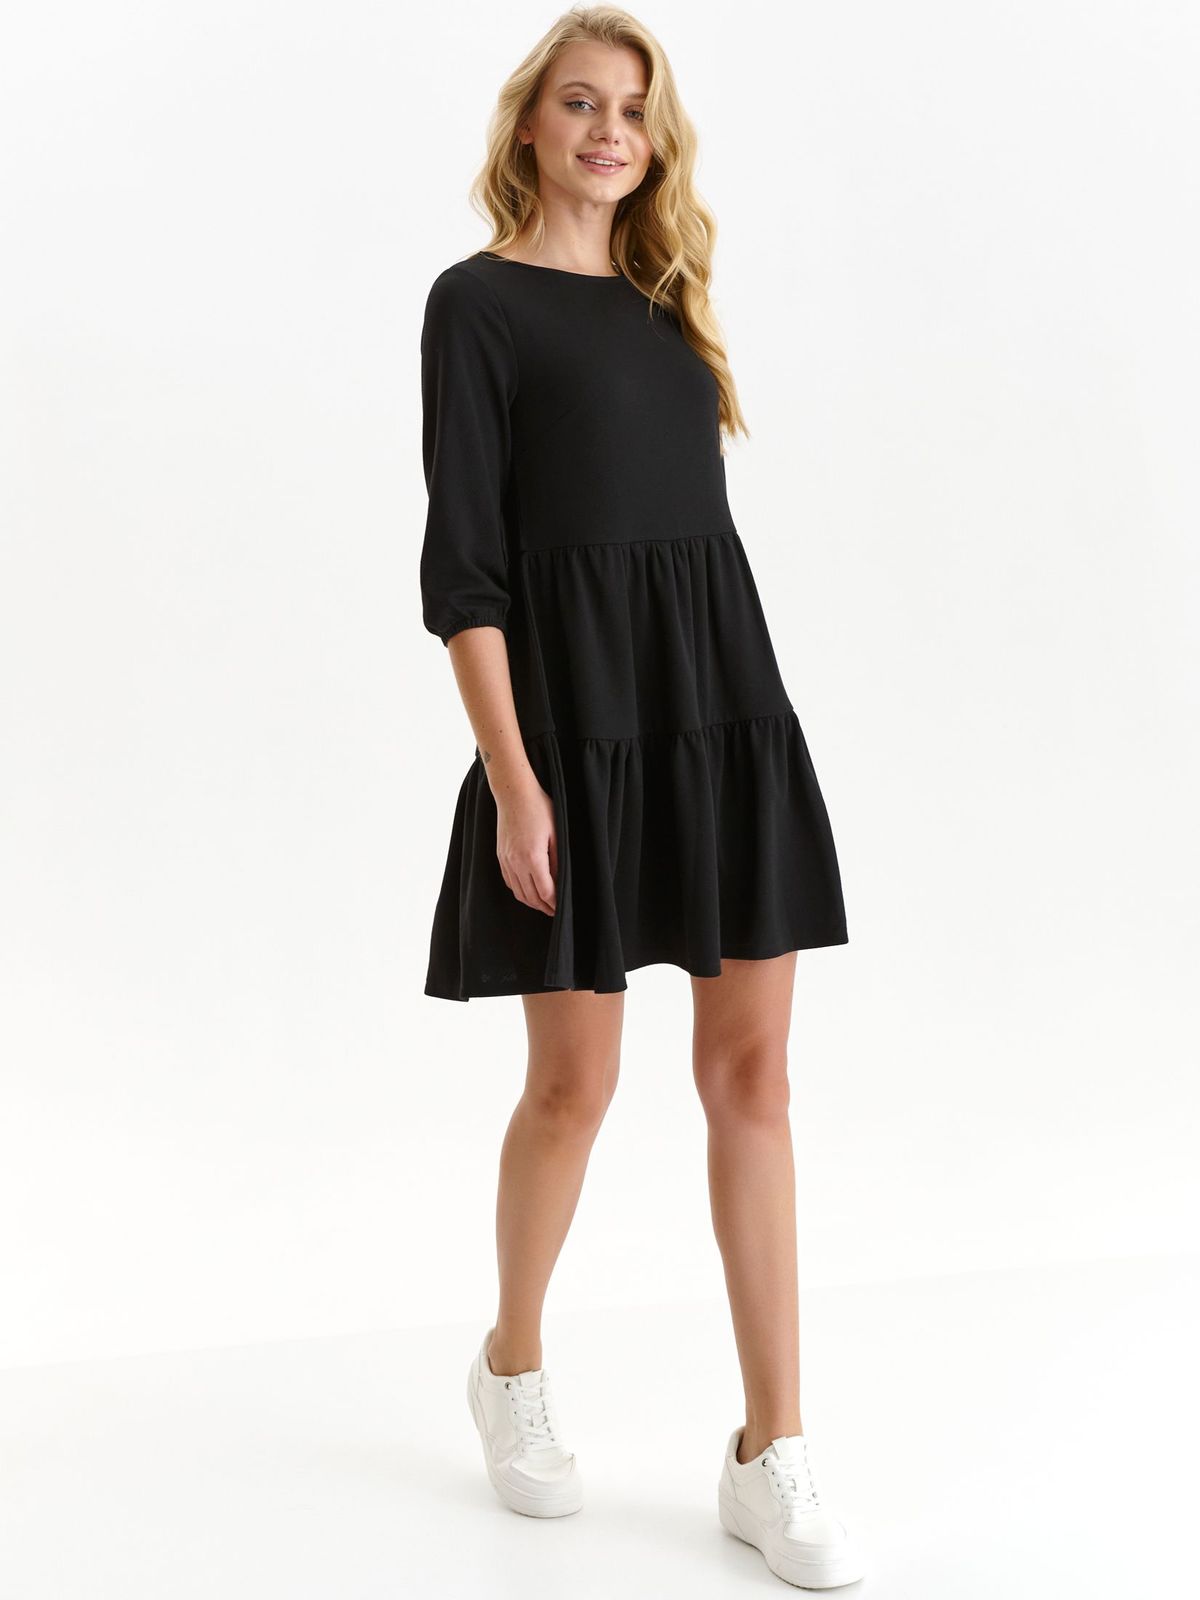 Black dress thin fabric short cut loose fit